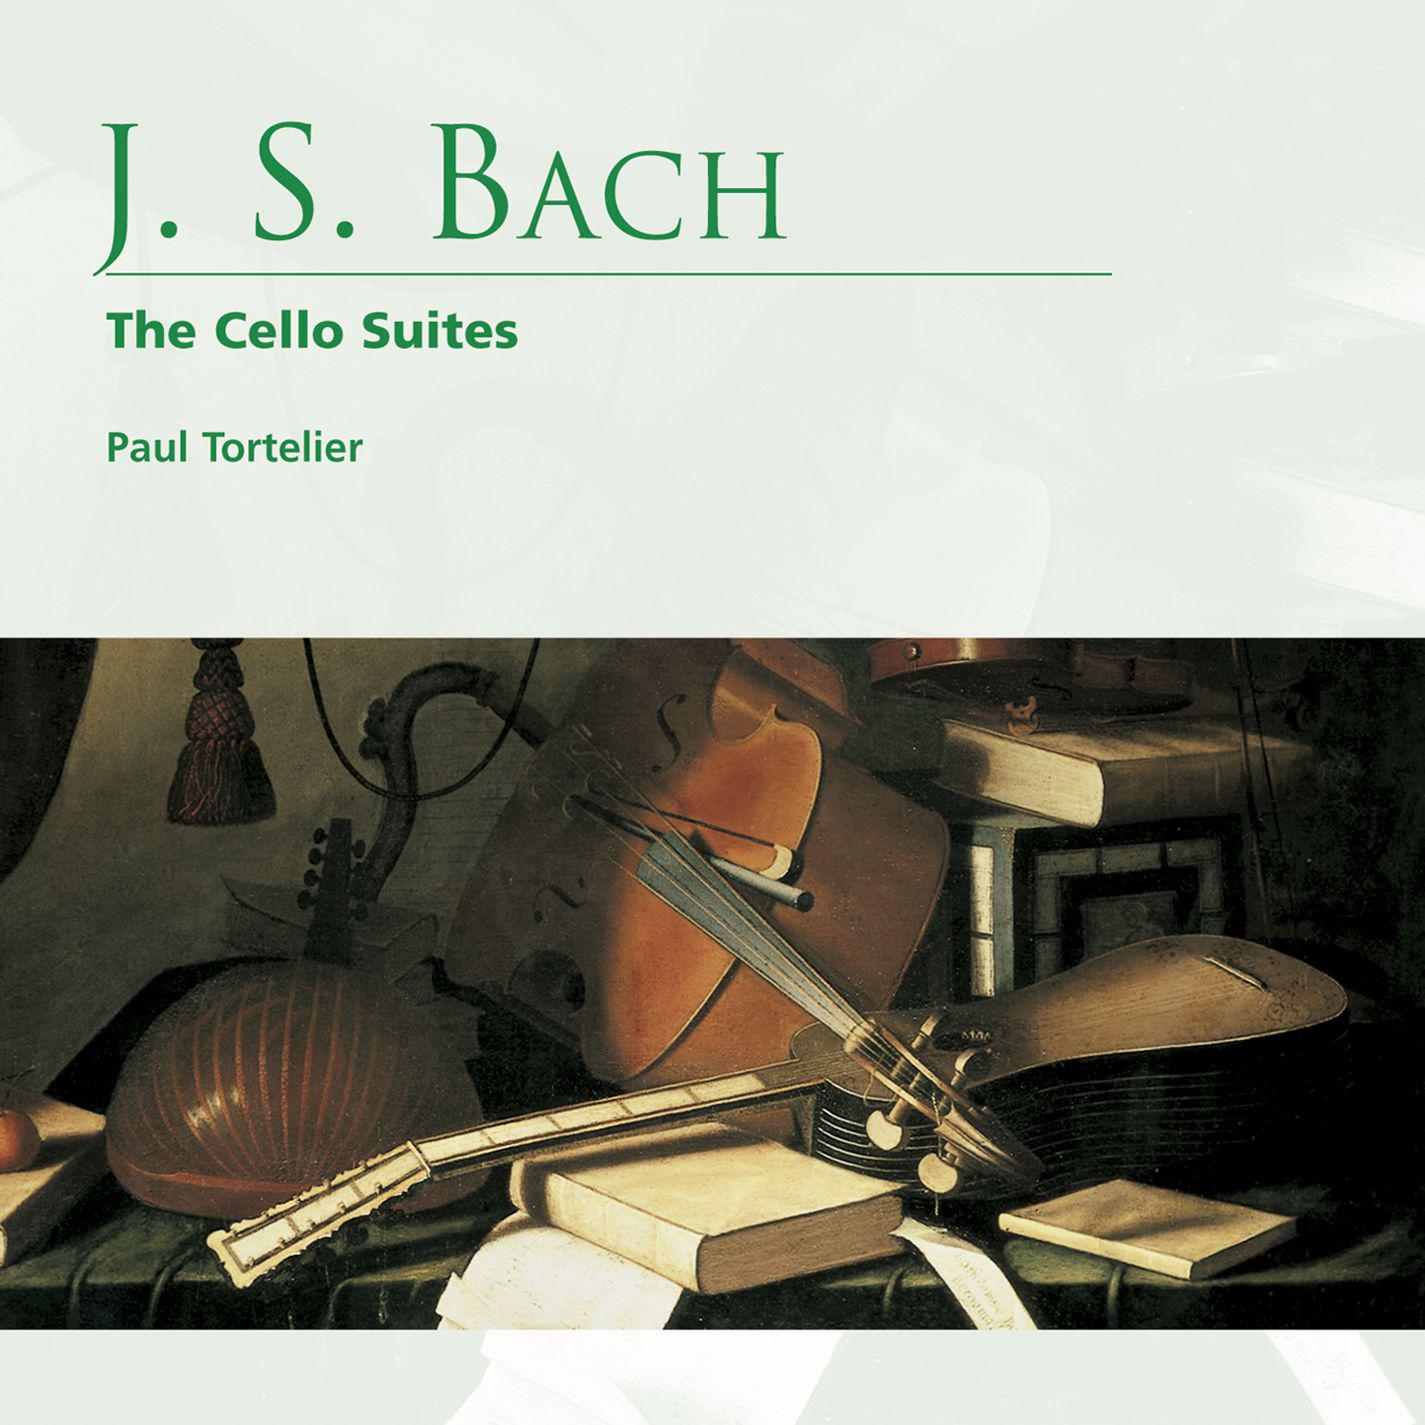 Cello Suite No. 5 in C Minor BWV 1011: III. Courante